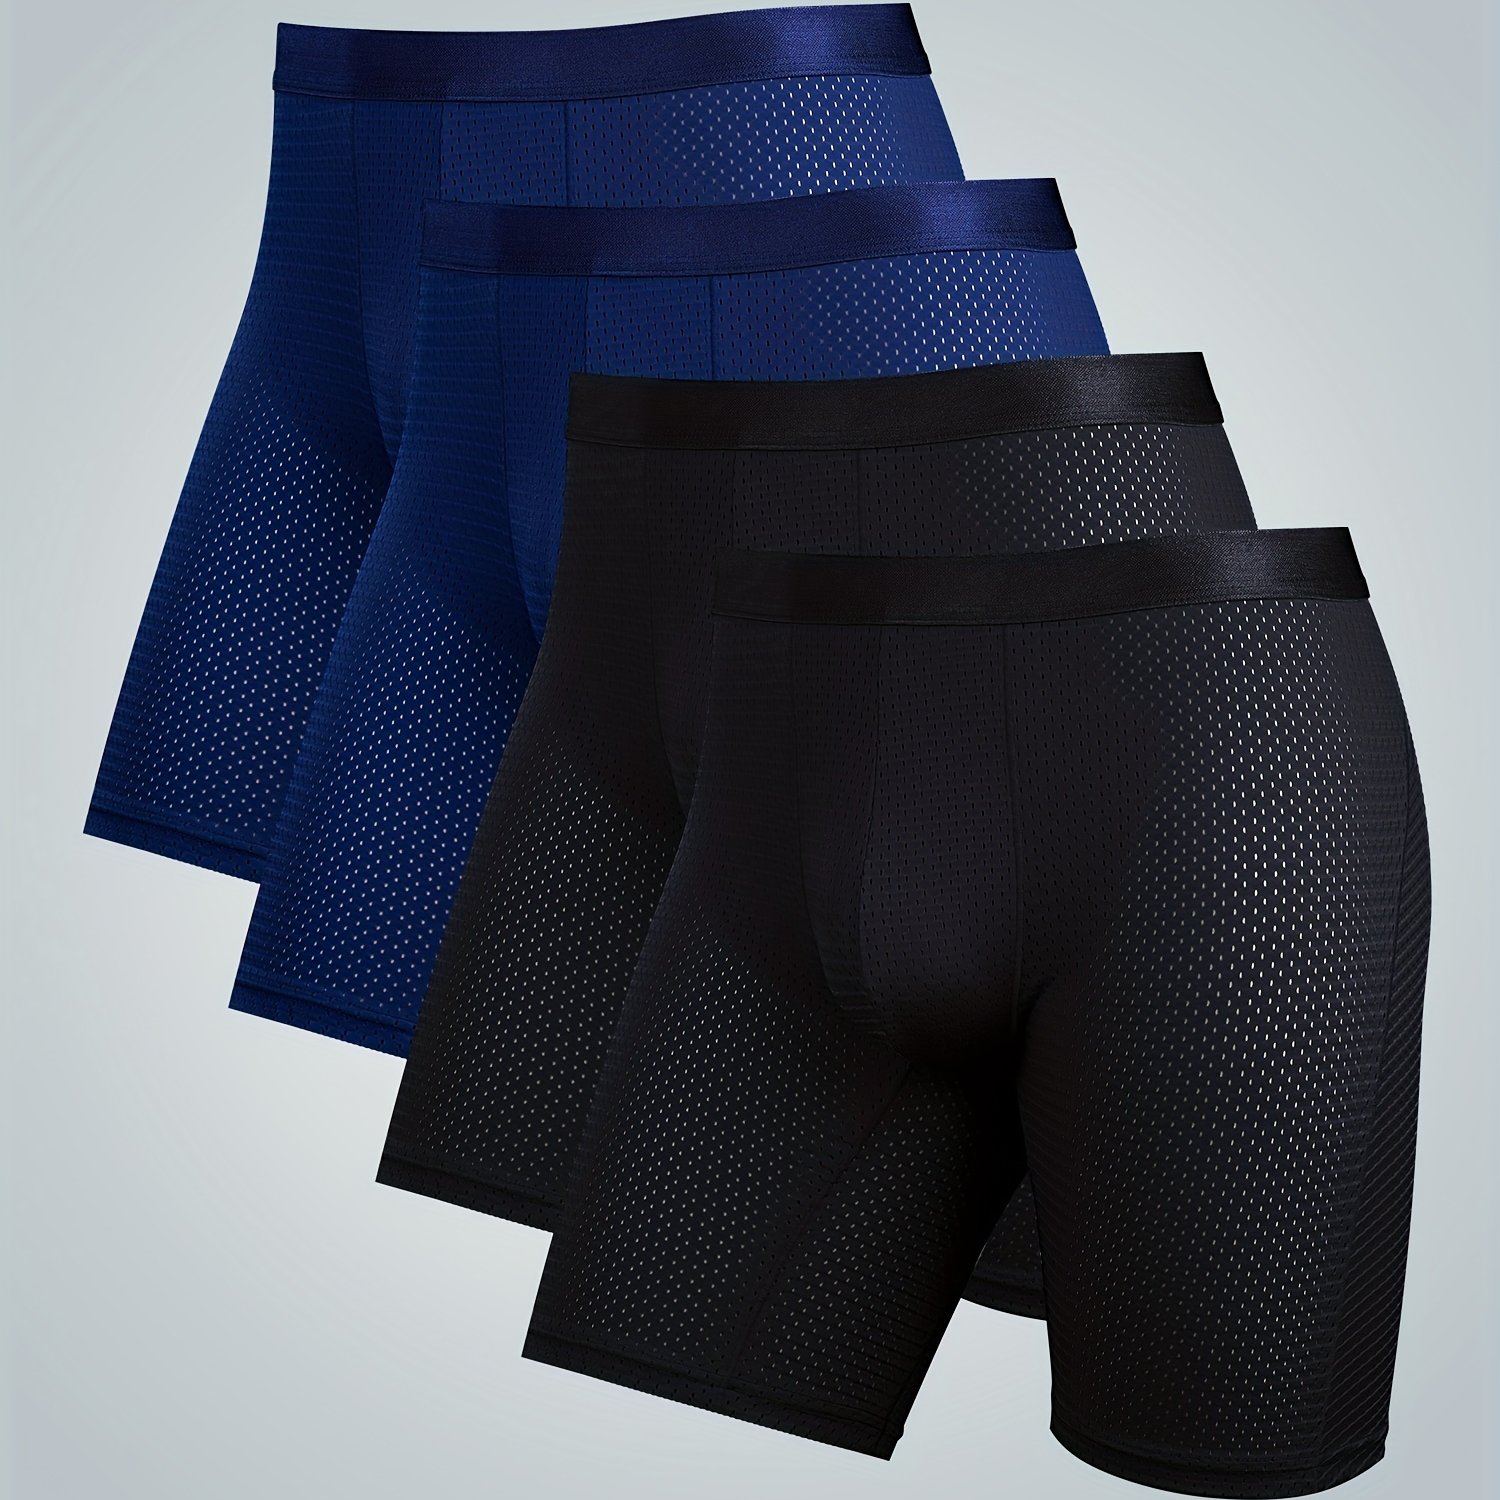 Men's breathable briefs - Dark blue - Decathlon